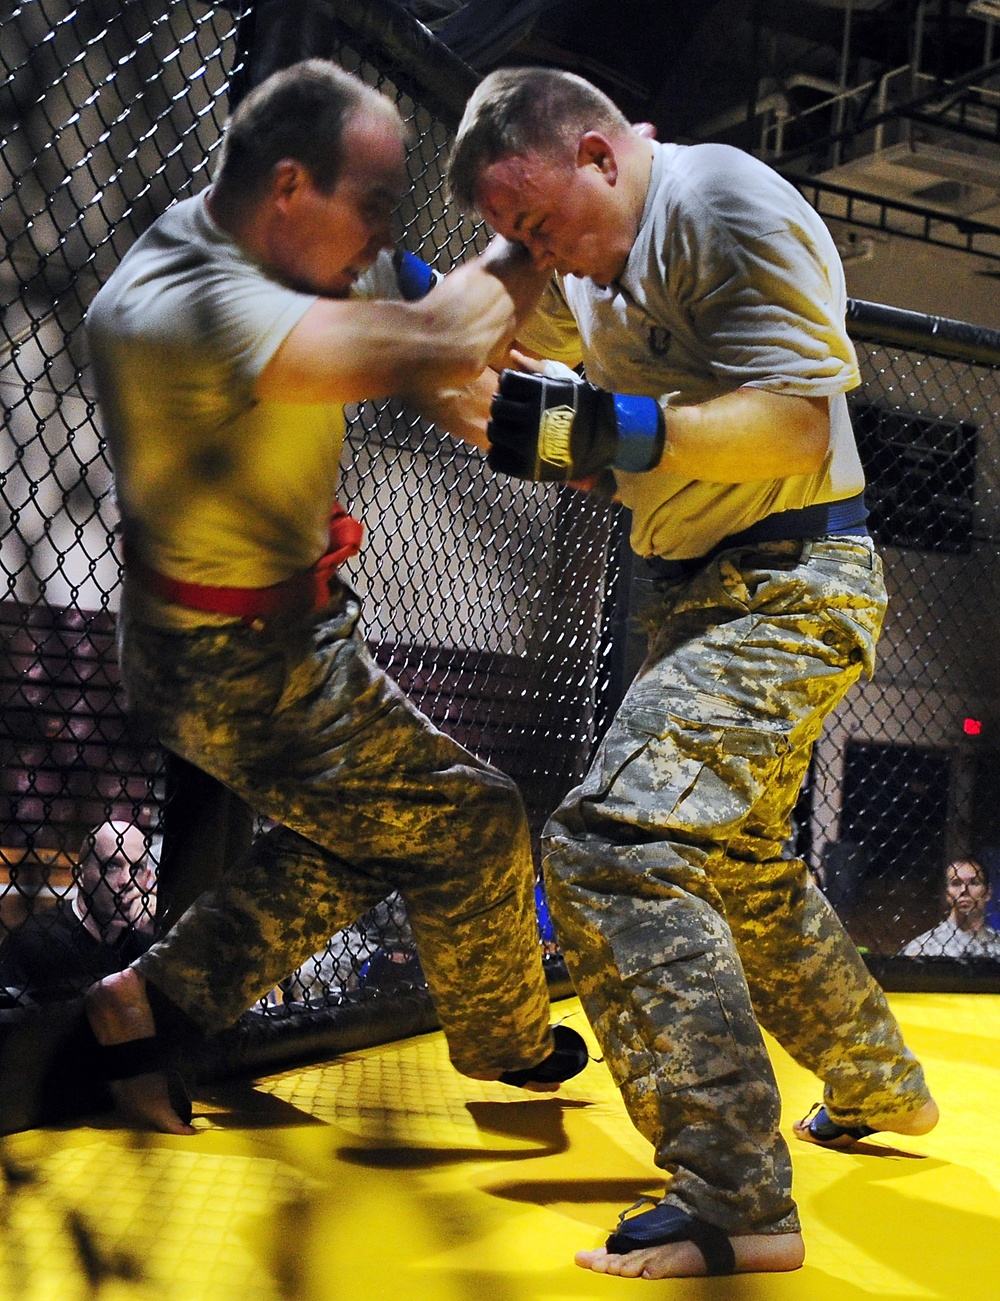 2013 USARAK Combatives Tournament